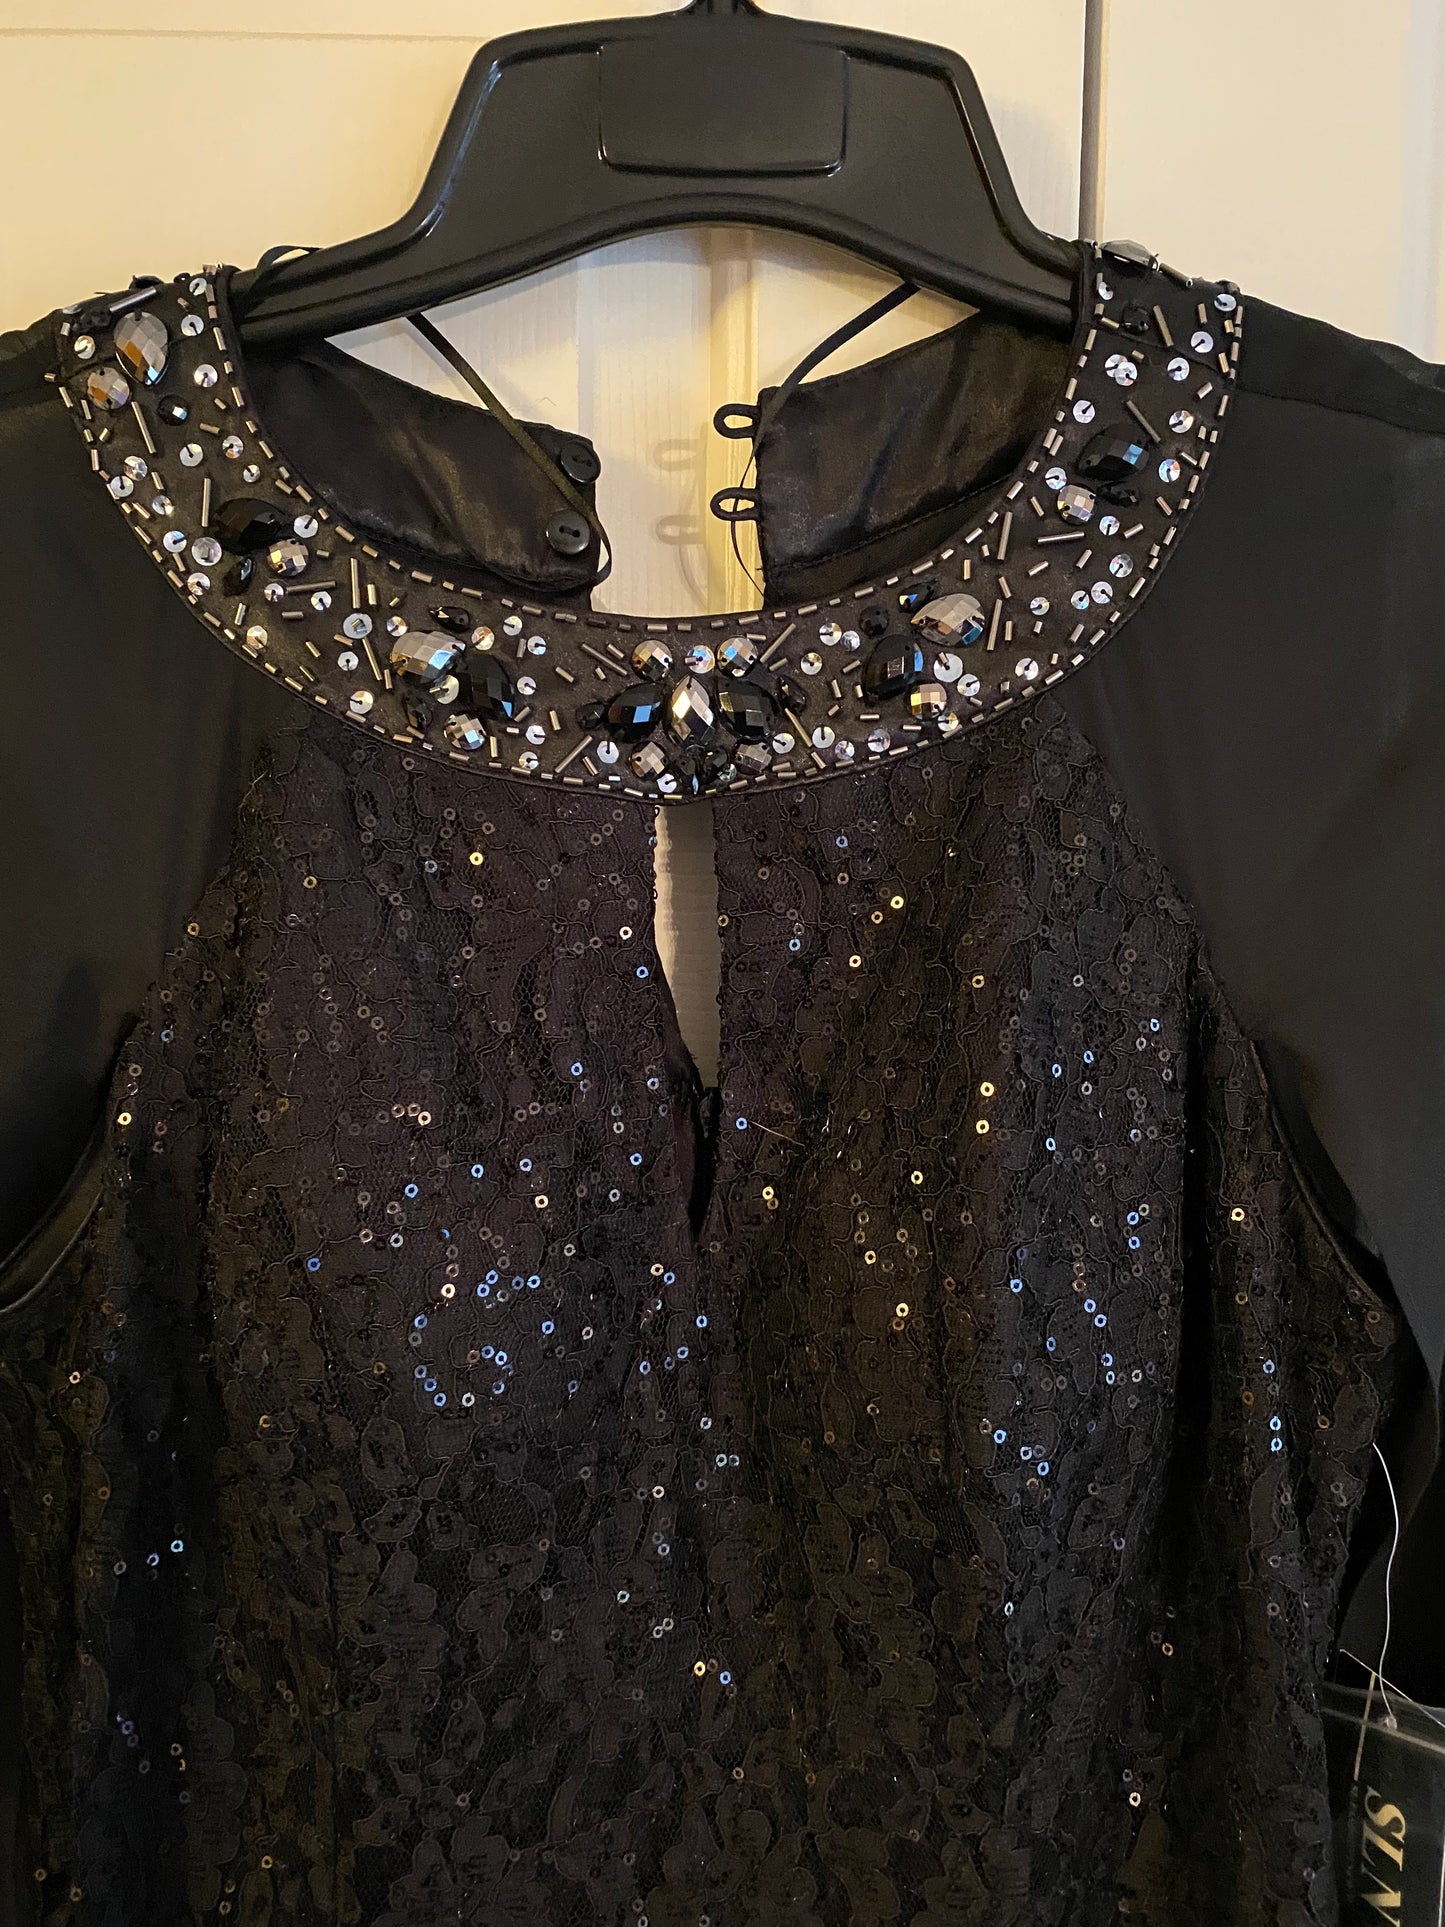 S.L. Fashions Women's Petite Long Sequin Dress with Capelet, Bead Black, 8P